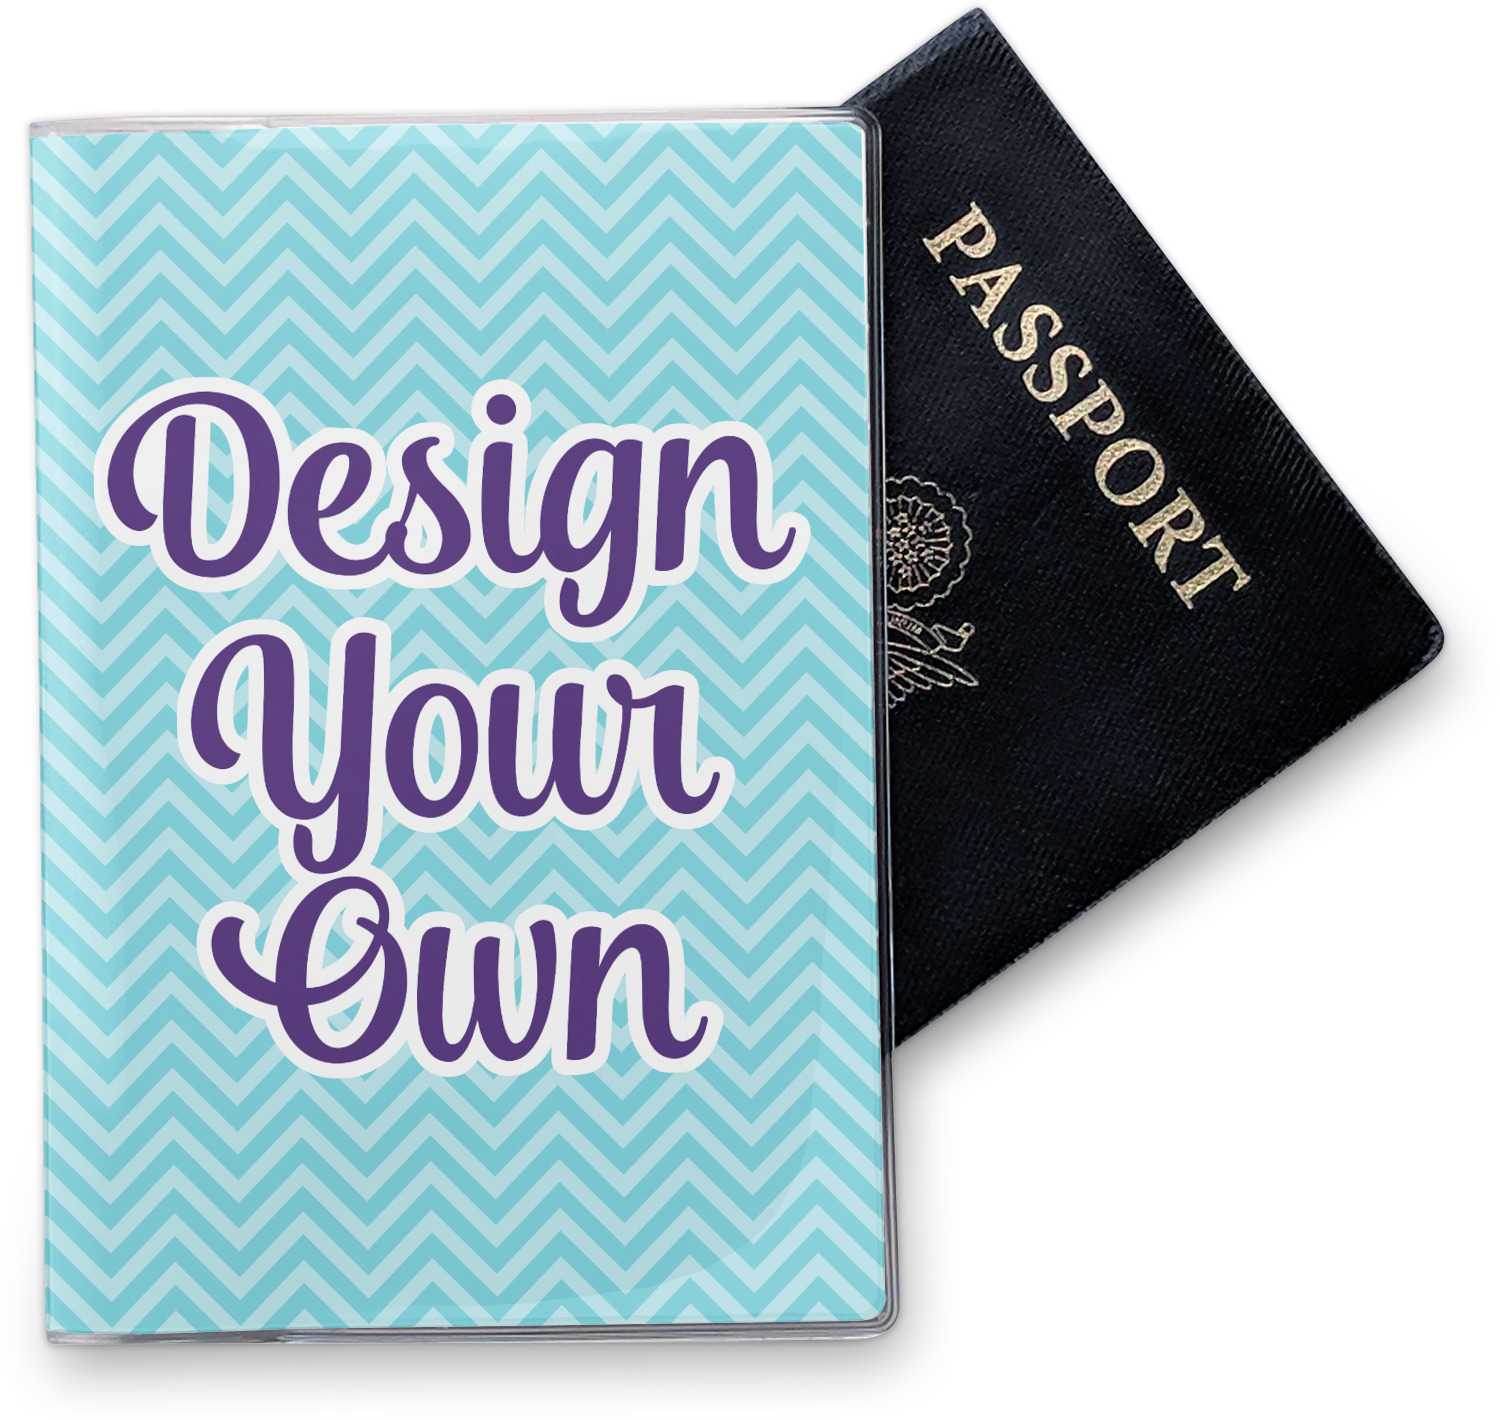 Design Your Own Passport - Vinyl Cover | YouCustomizeIt